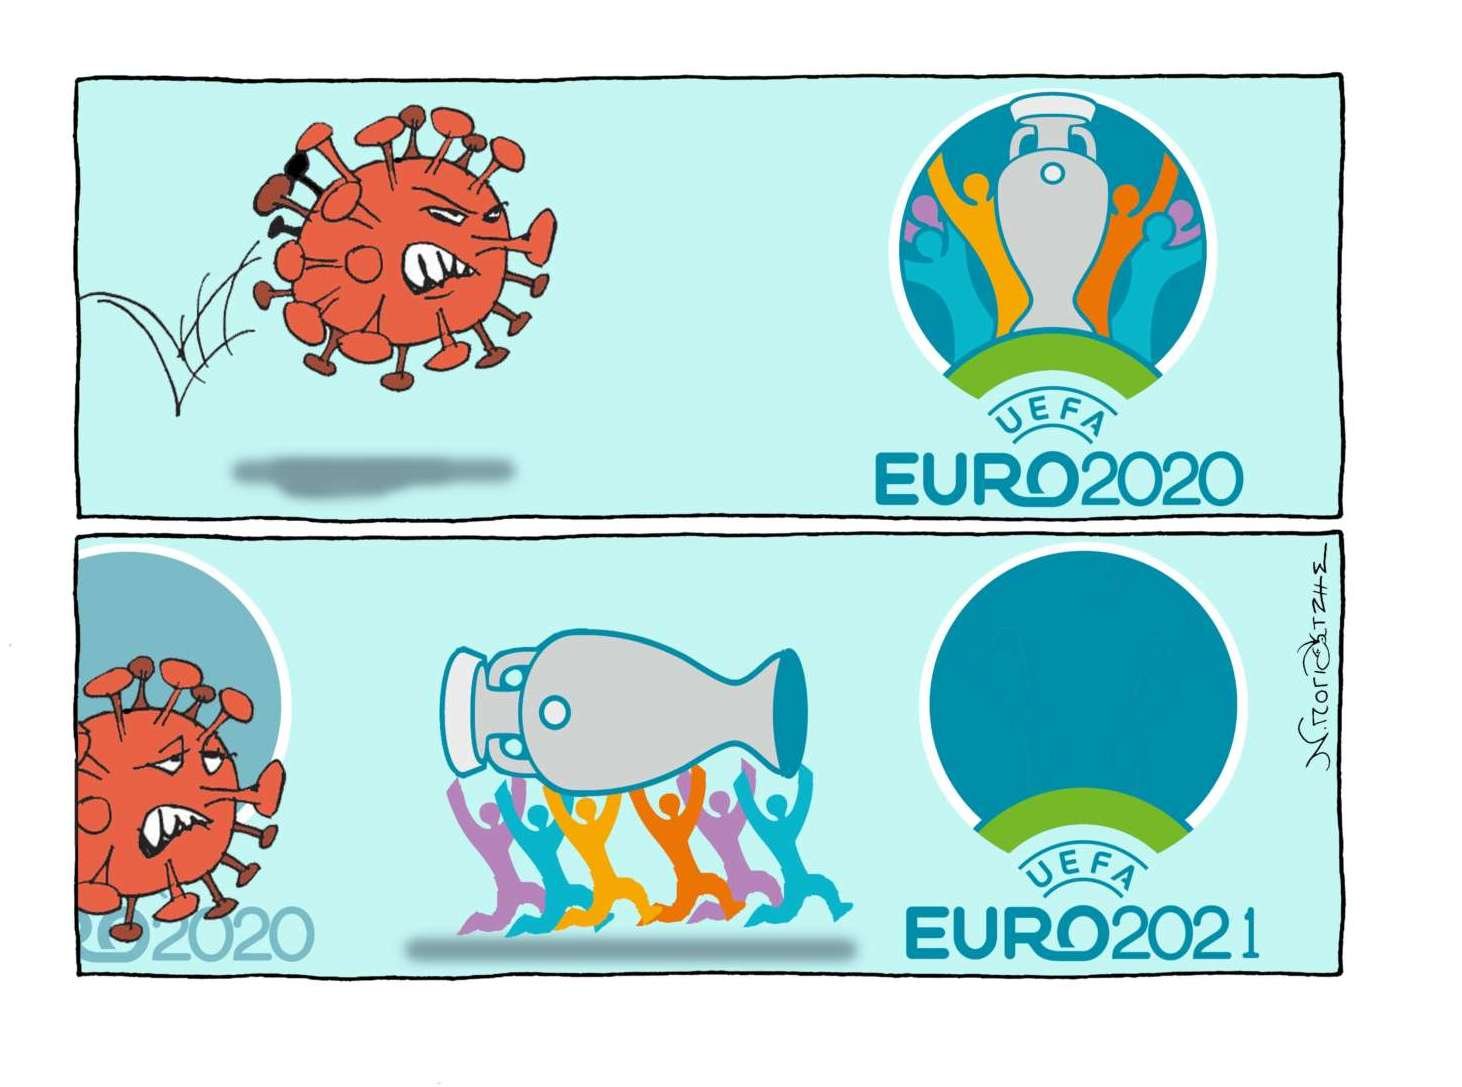 Aντίο Euro 2020, καλώς ήρθες Euro 2021!